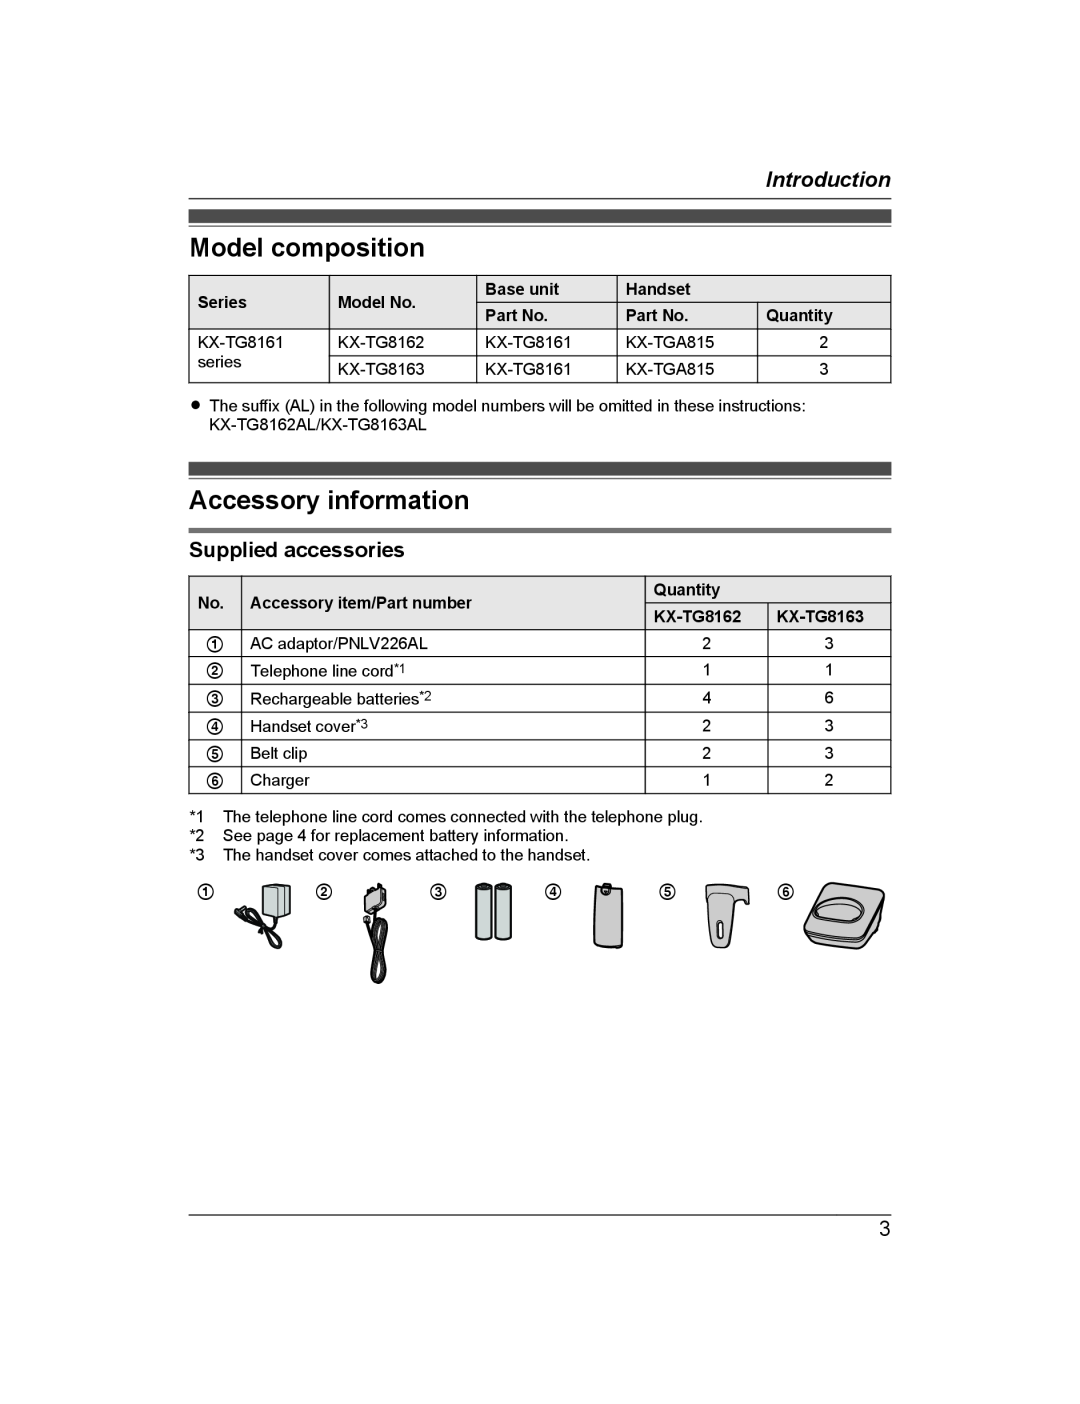 Panasonic KX-TG8162AL, KX-TG8163AL Model composition, Accessory information, Introduction, Supplied accessories 